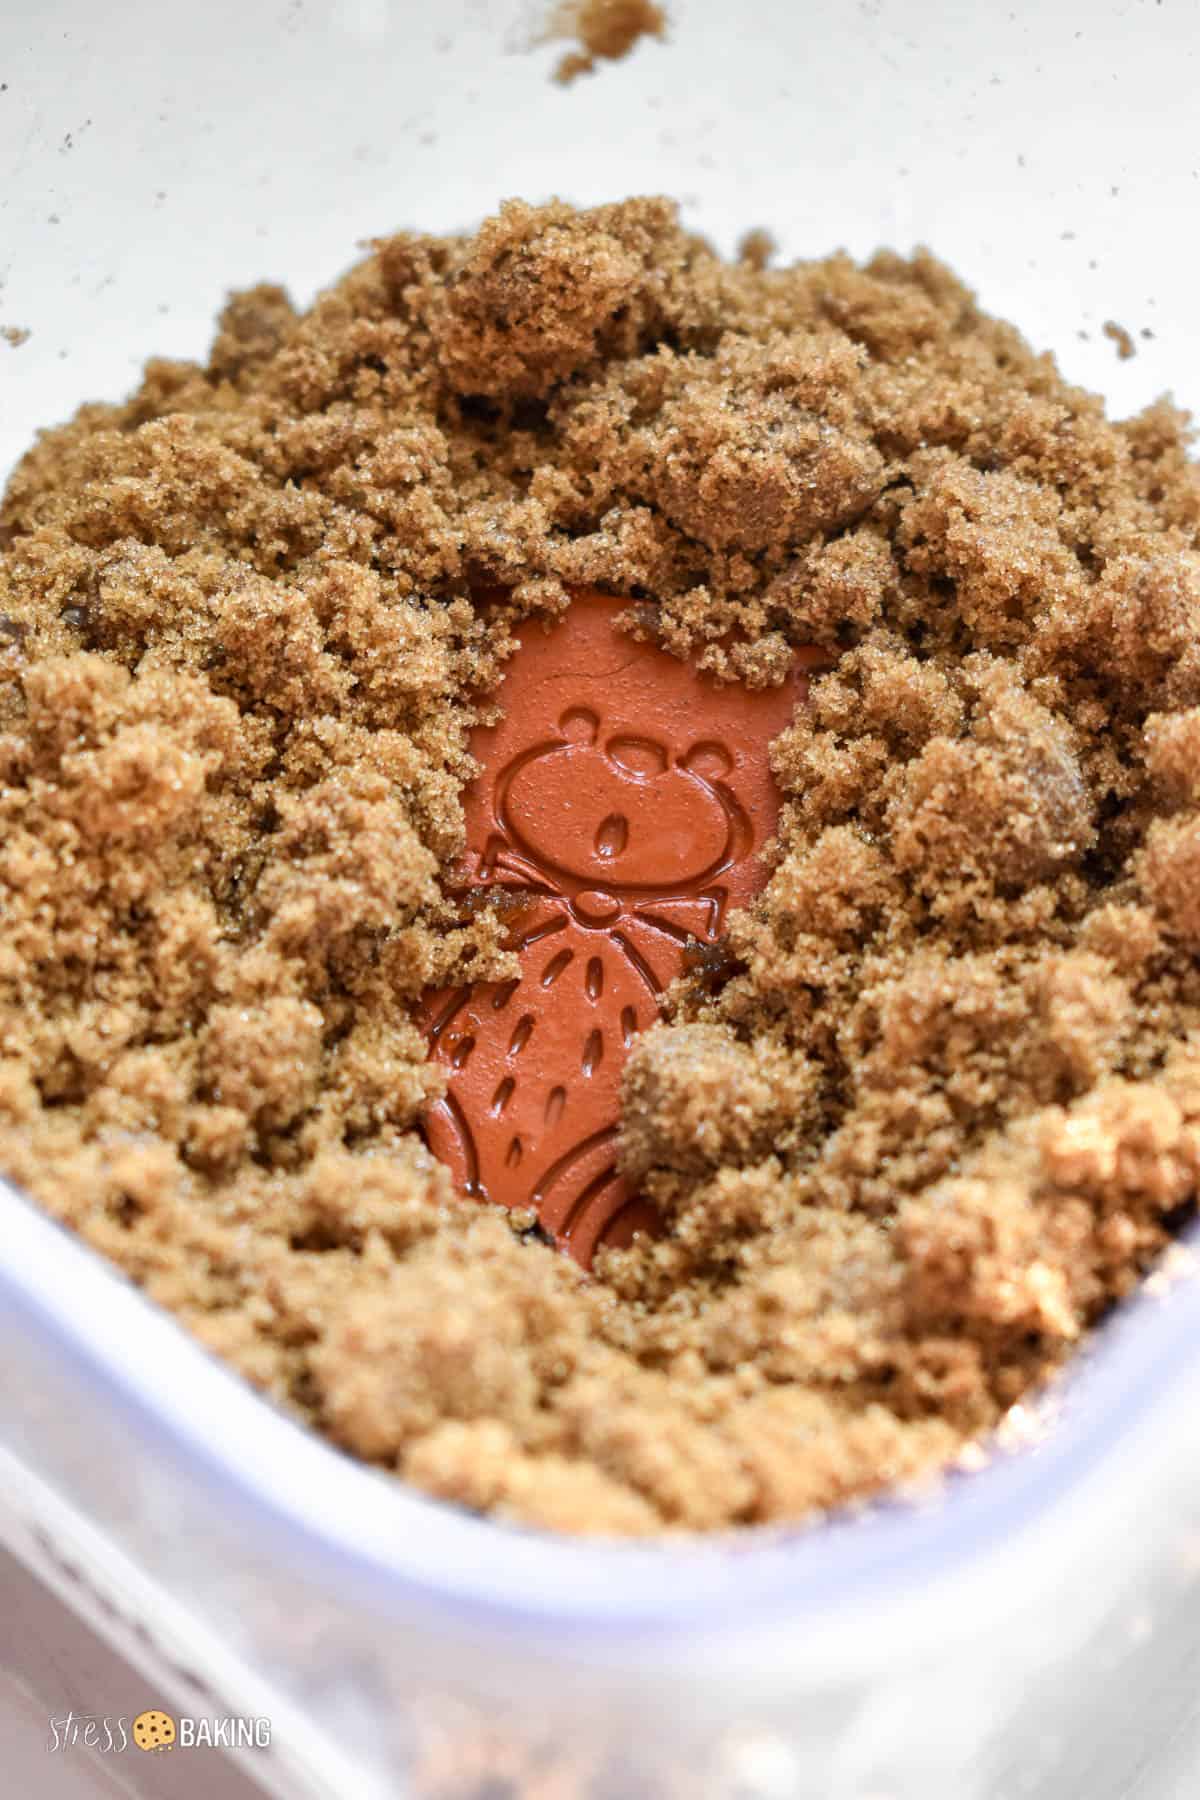 A terracotta brown sugar bear sinking in a container of brown sugar